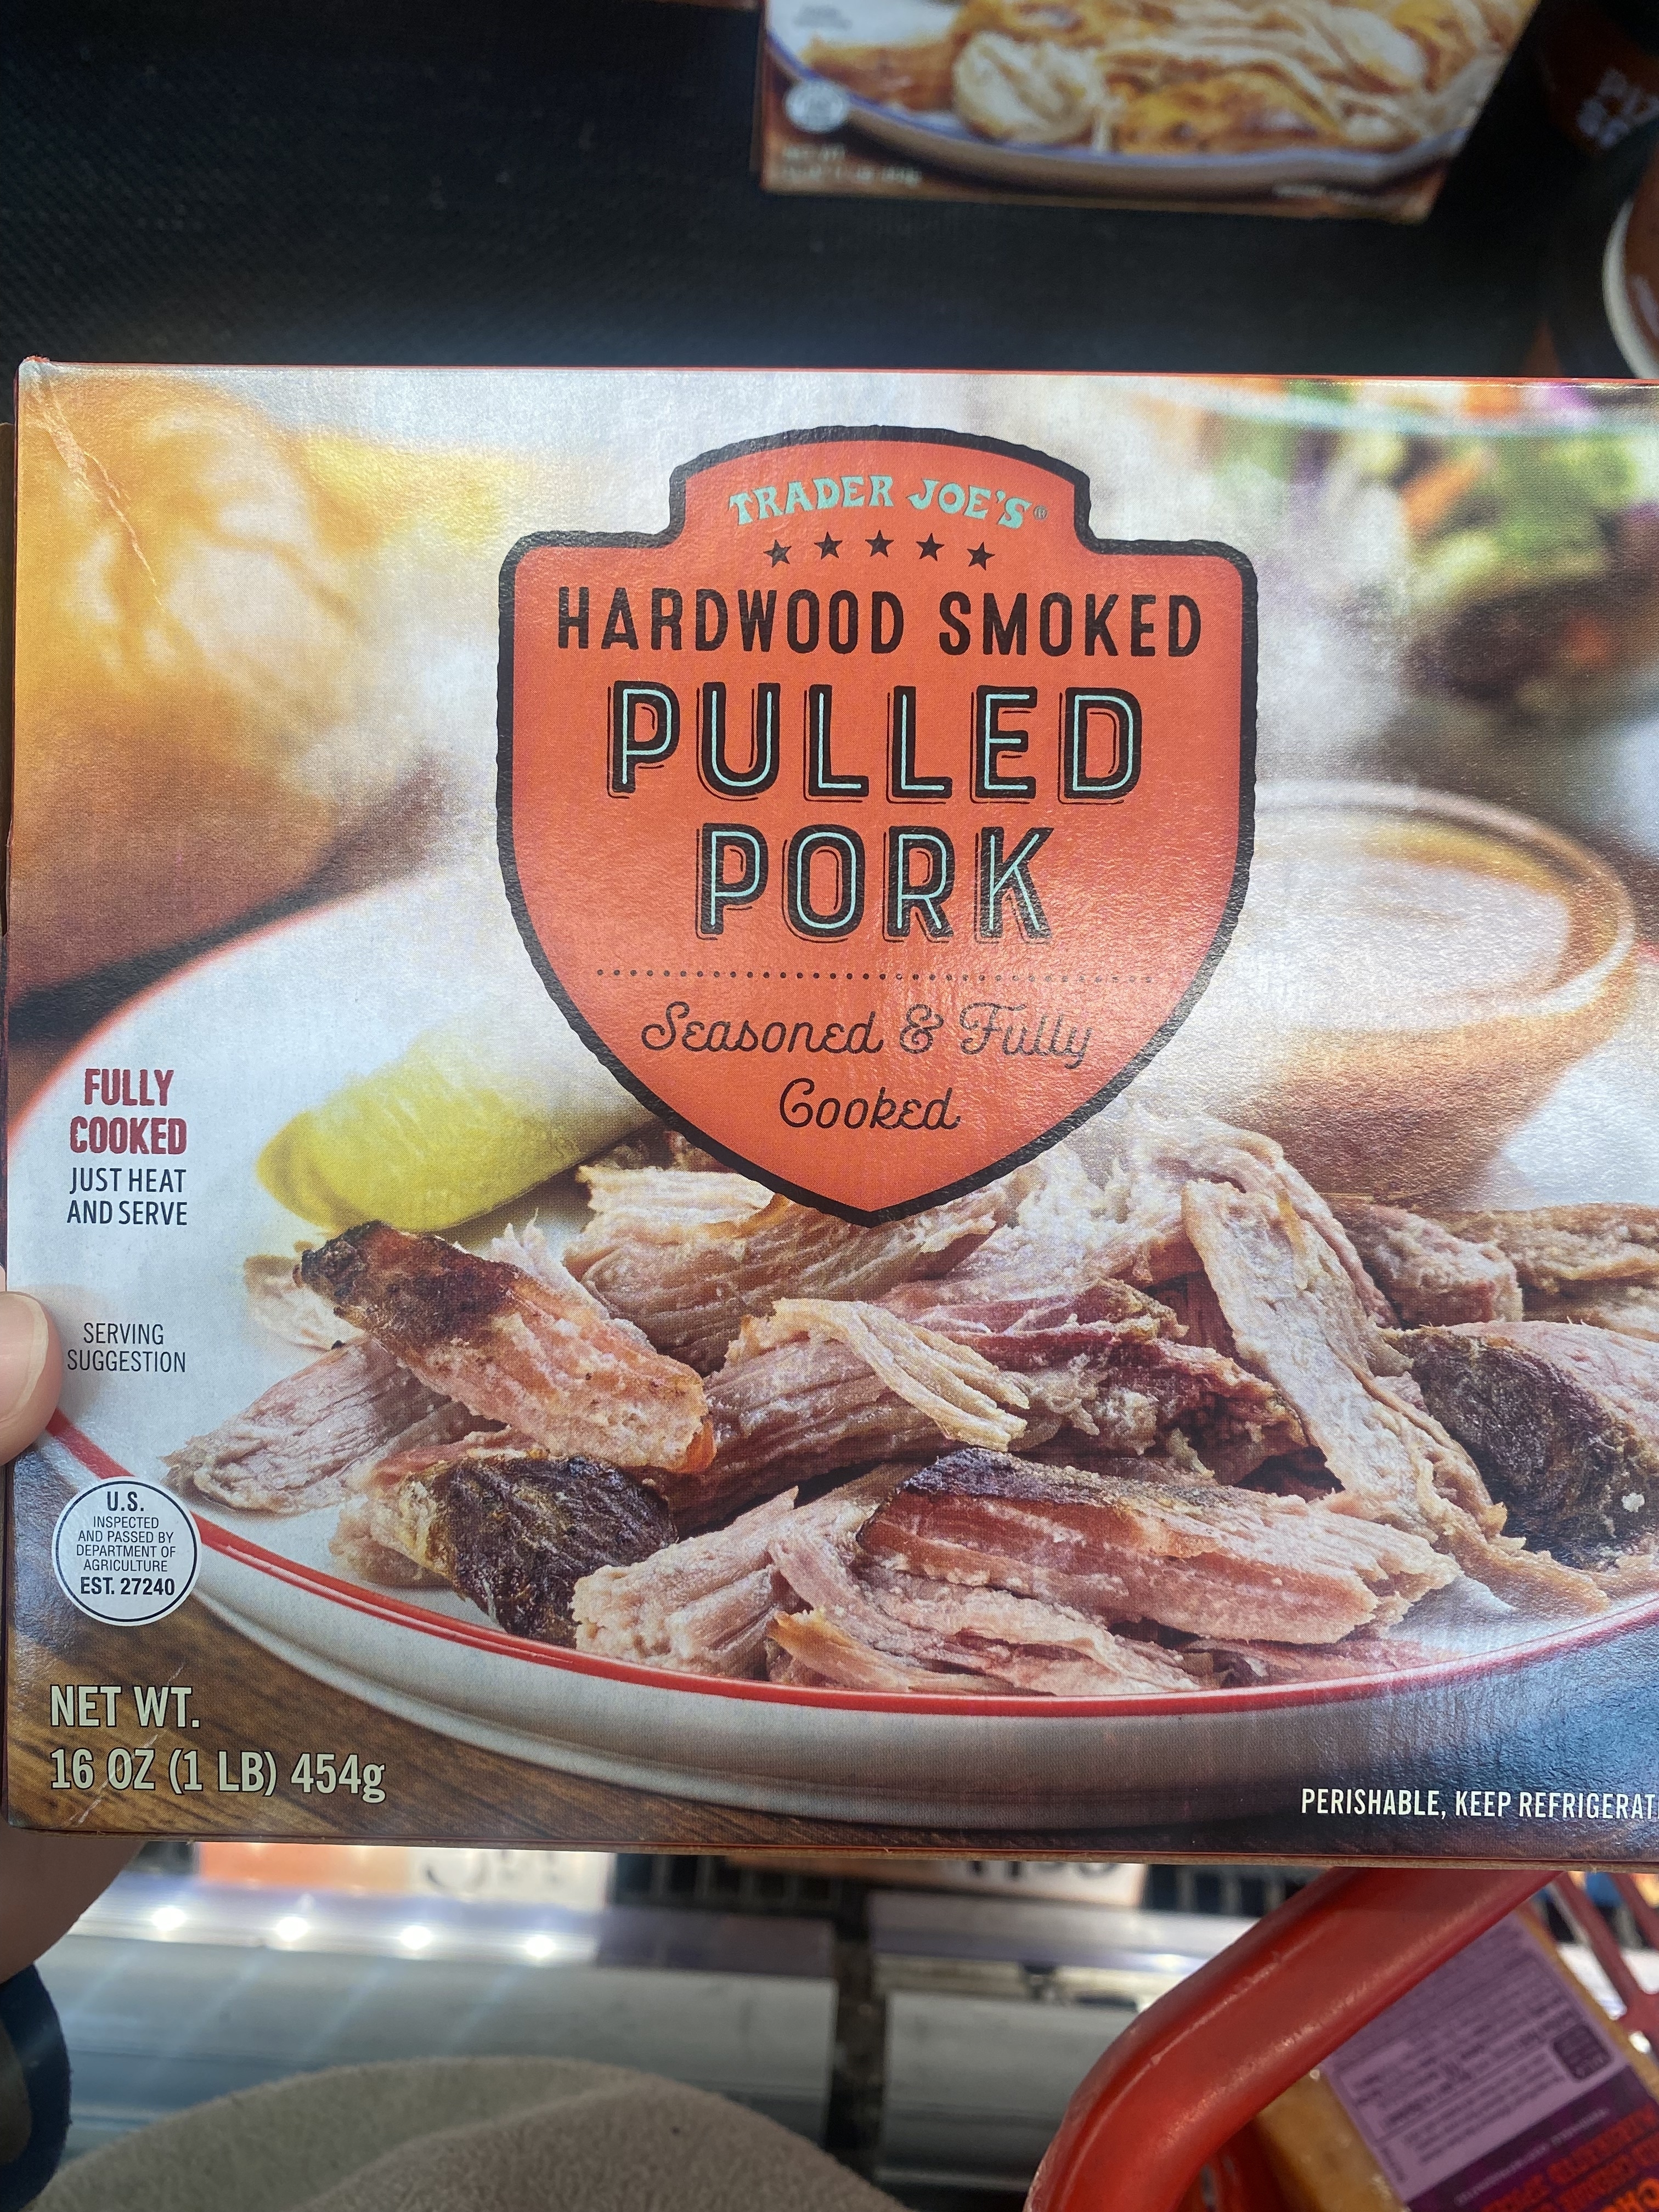 a box of hardwood smoked pulled pork